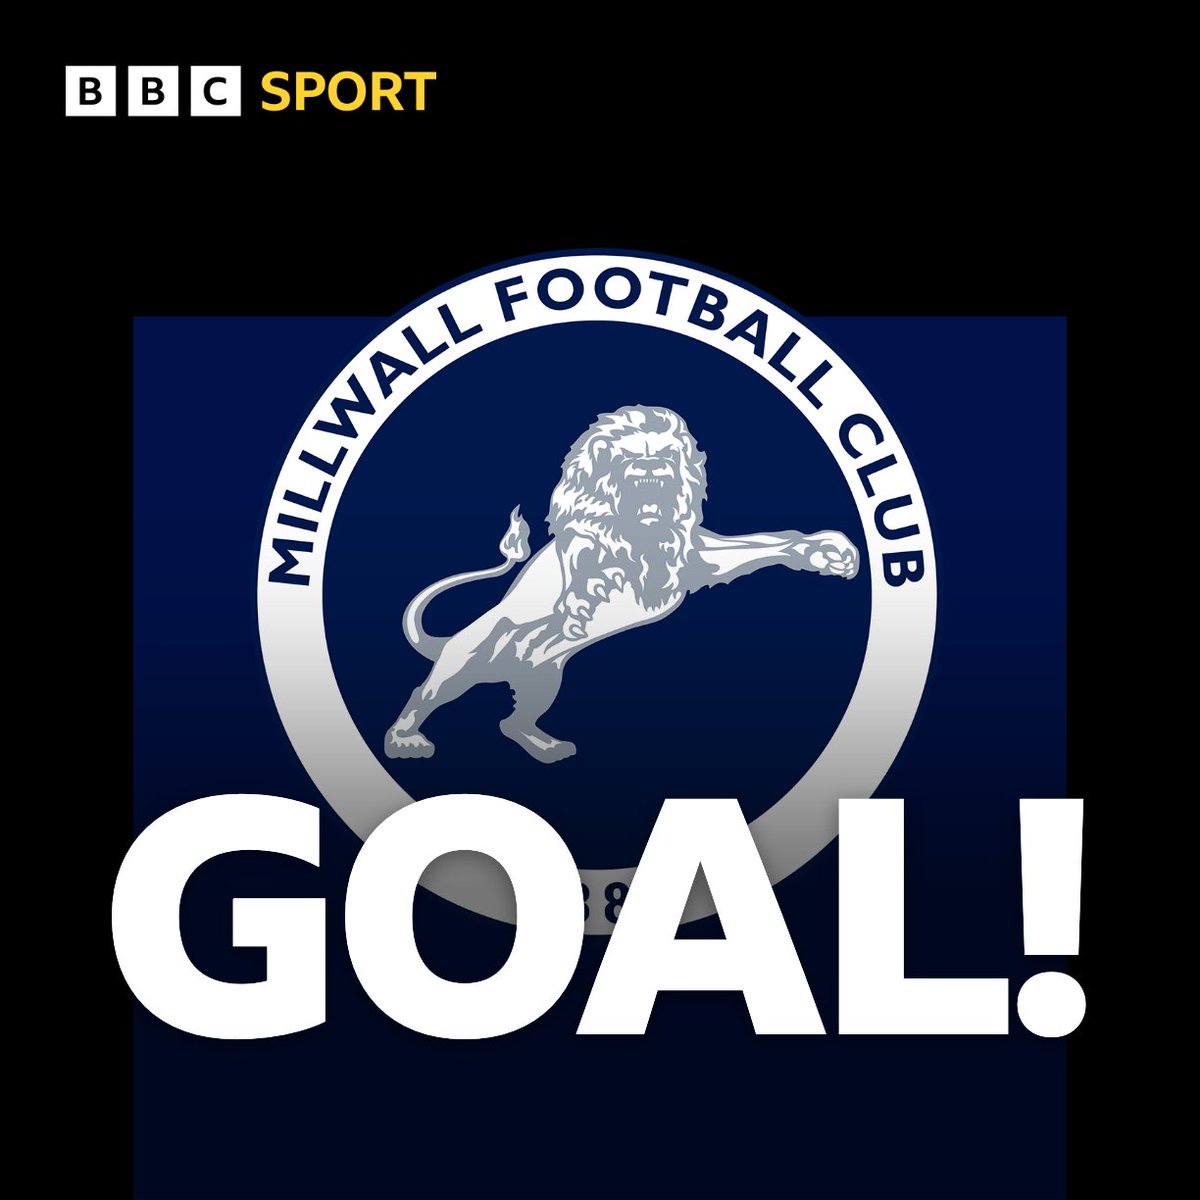 Millwall 1-0 Leeds United - BBC Sport